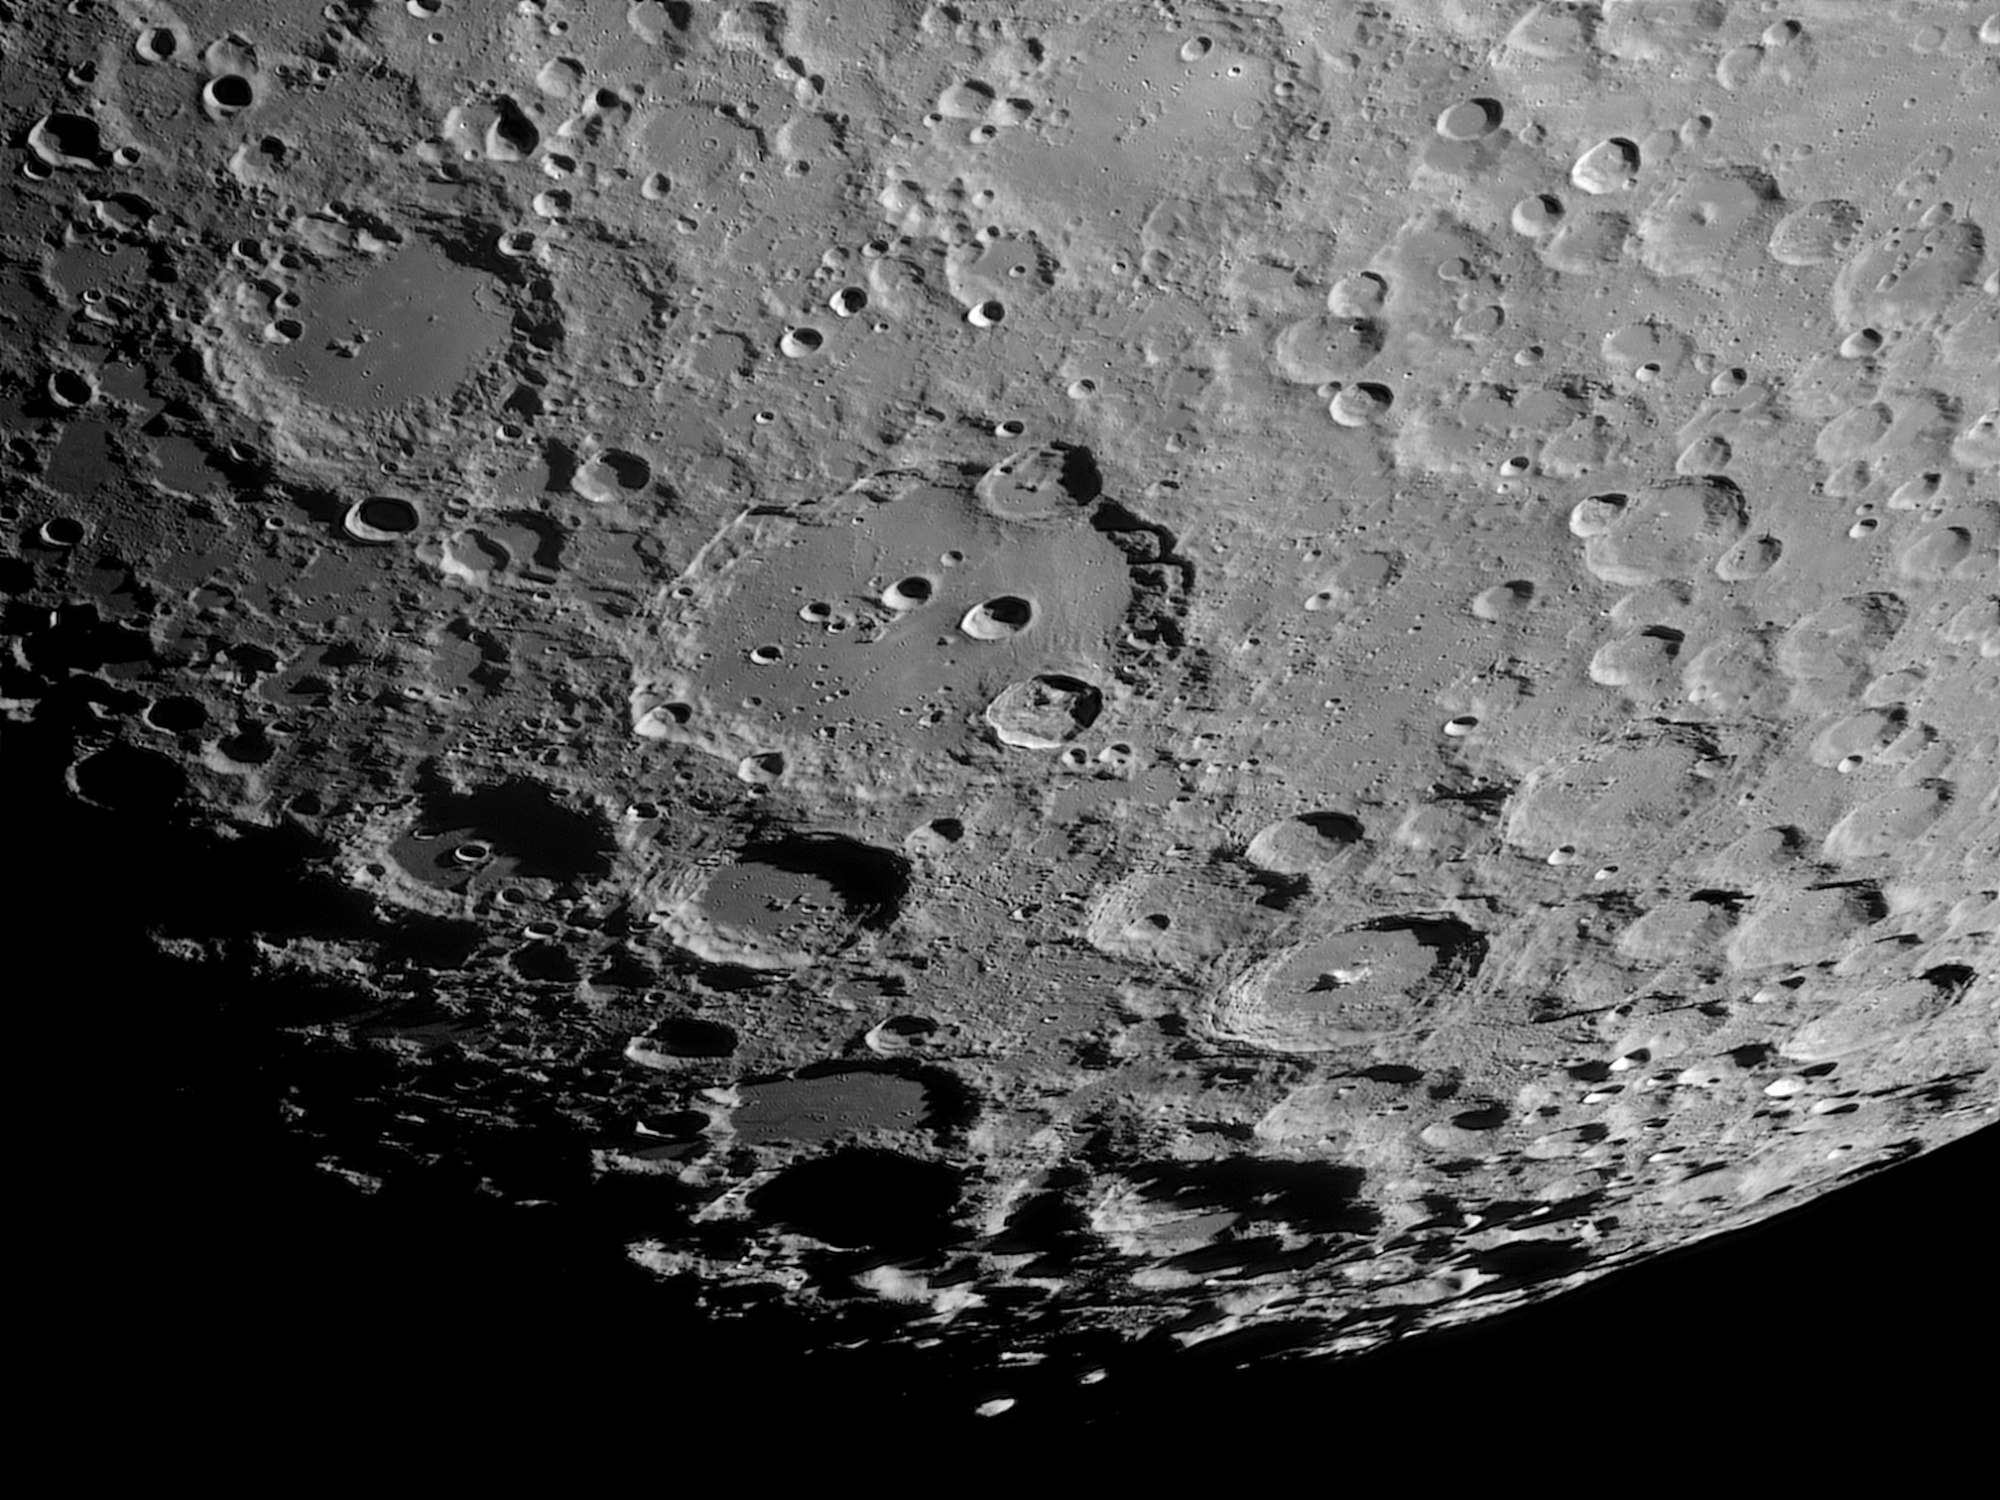 Lune-20210323_Cla-baV-PSAS.thumb.jpg.f8040a8b8f47148e7ba9cf25d337c2a9.jpg